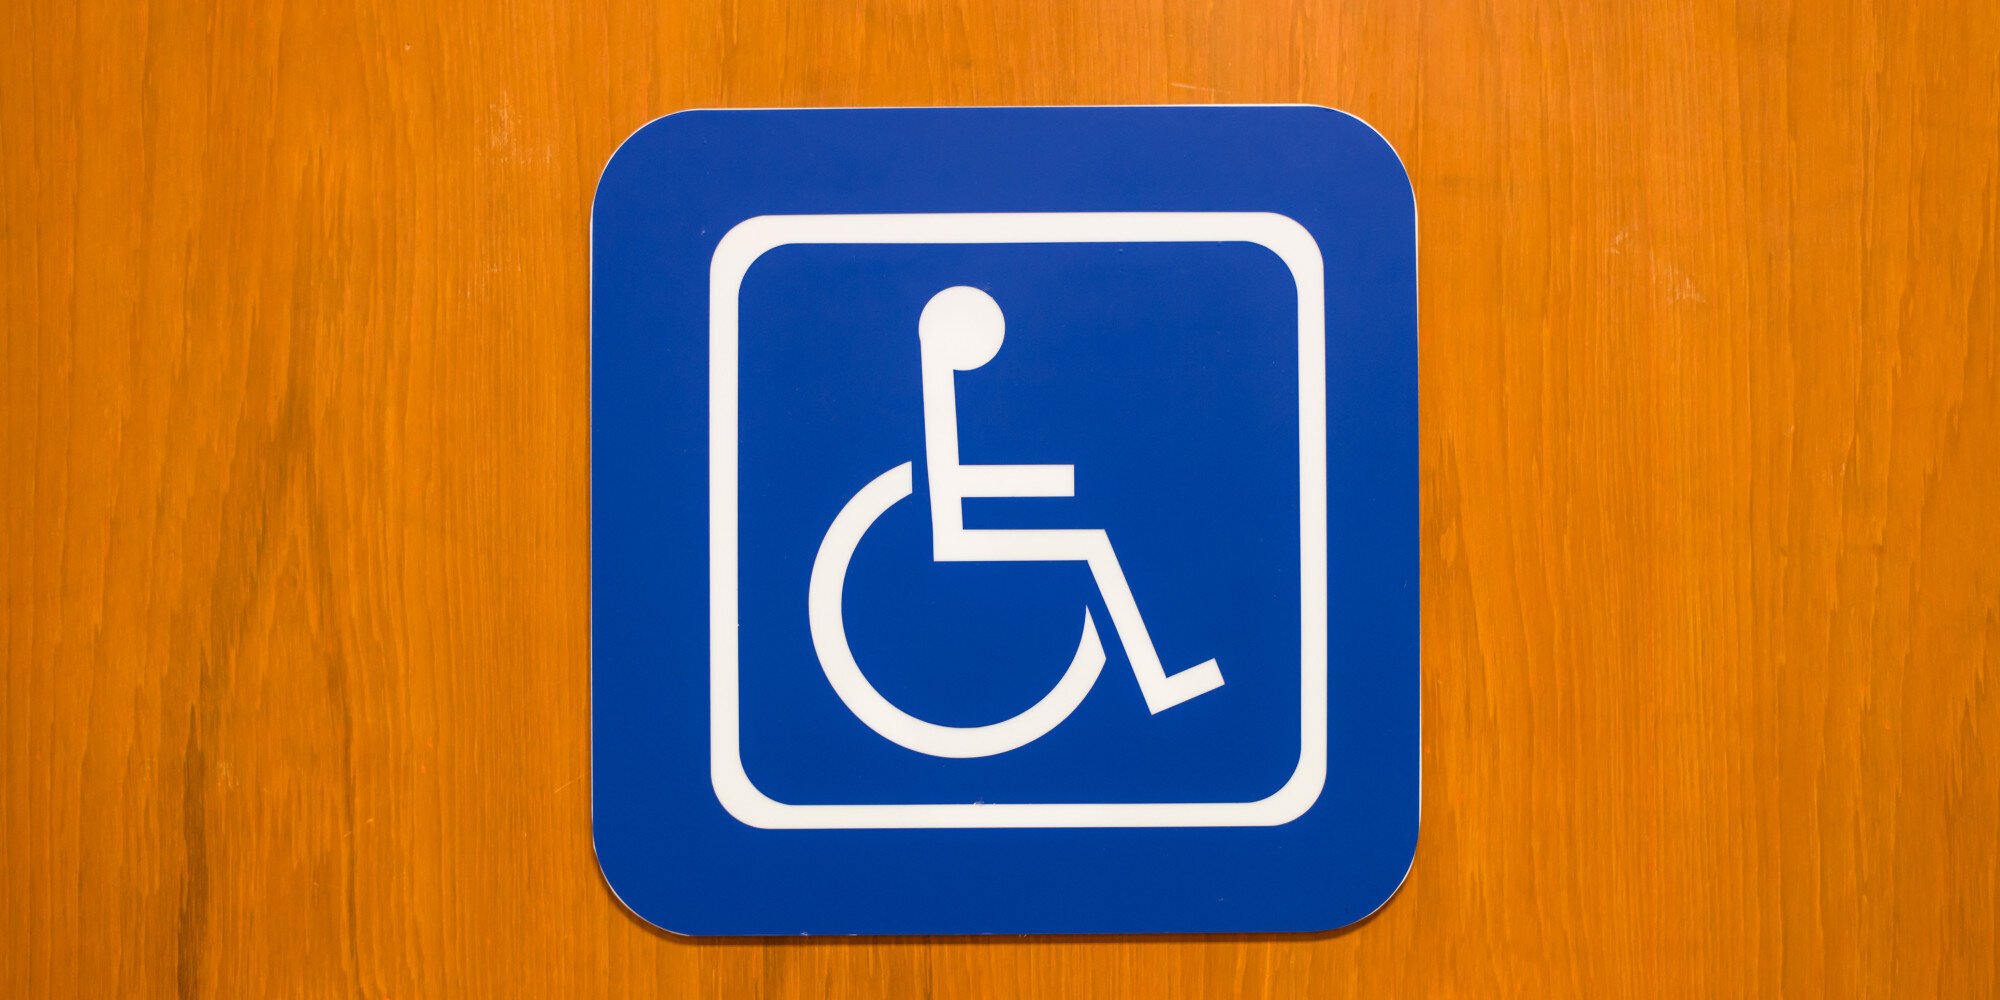 invisible disabilities canada